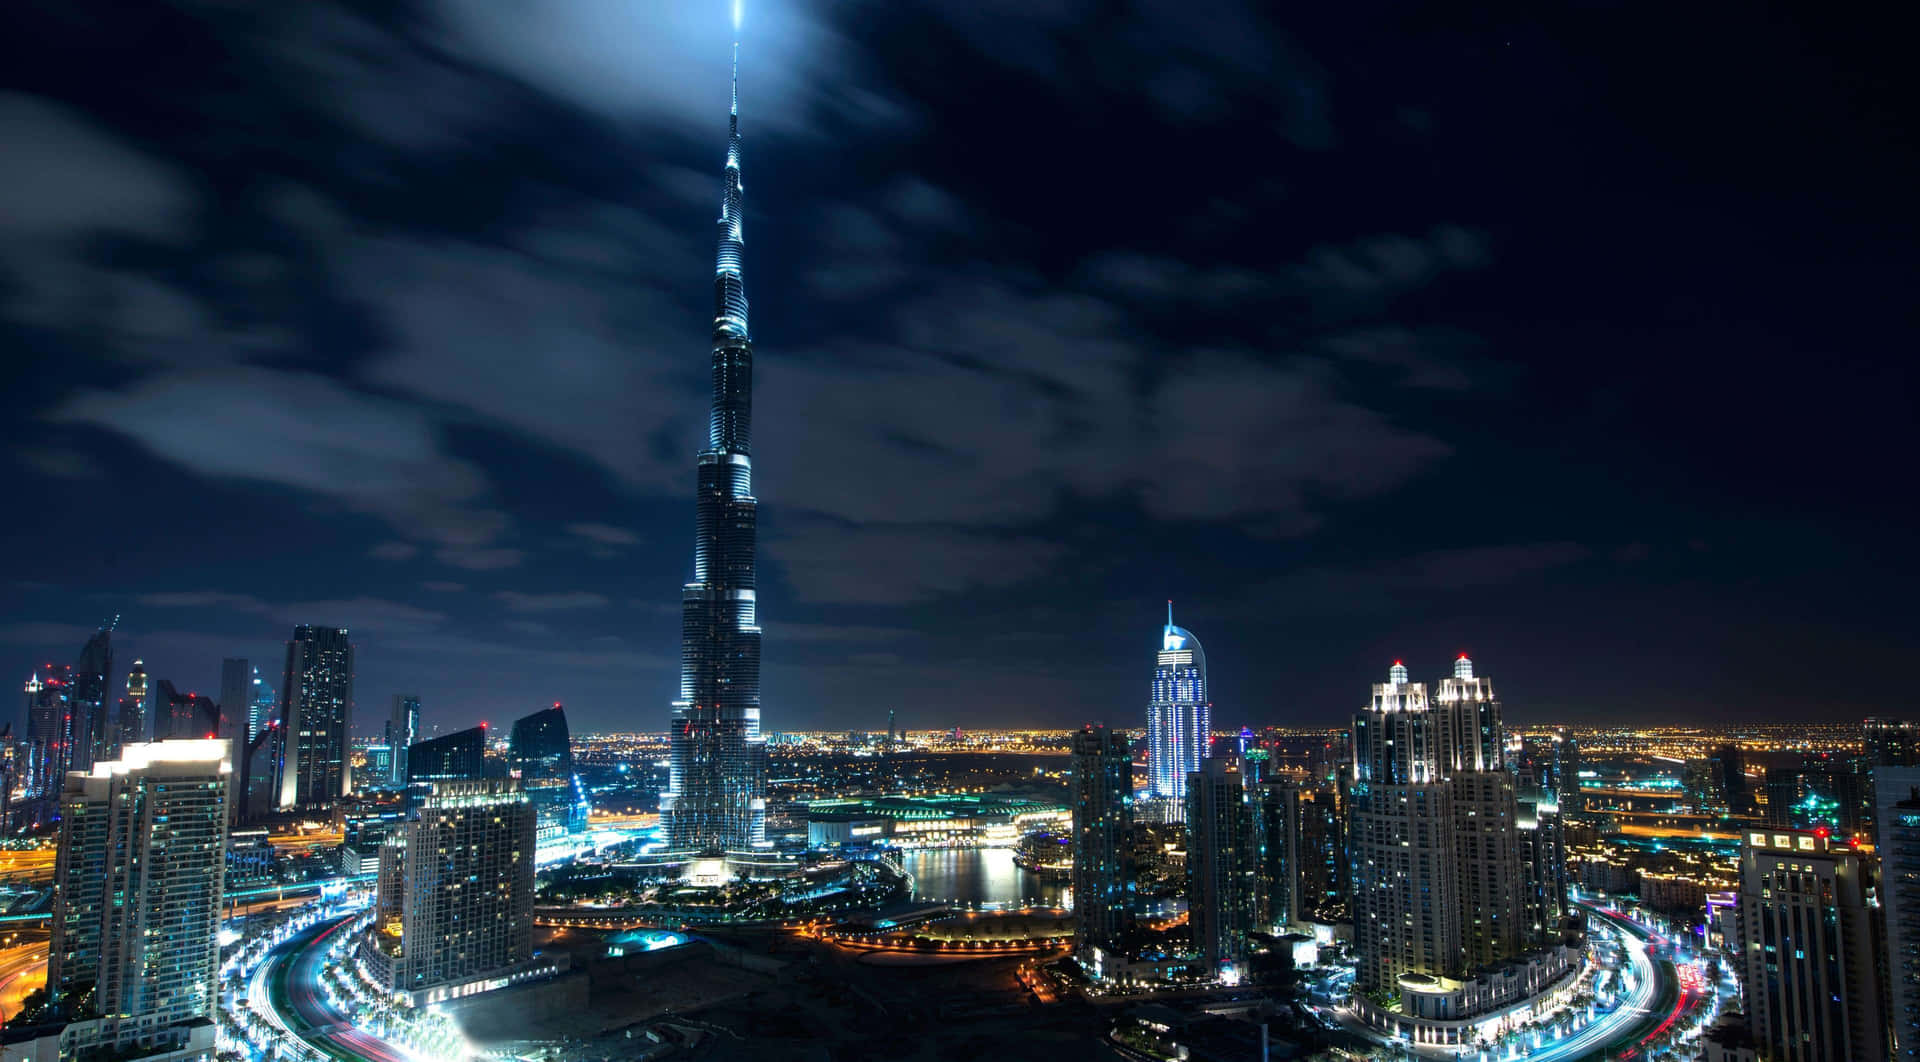 The Burj Khalifa Tower At Night